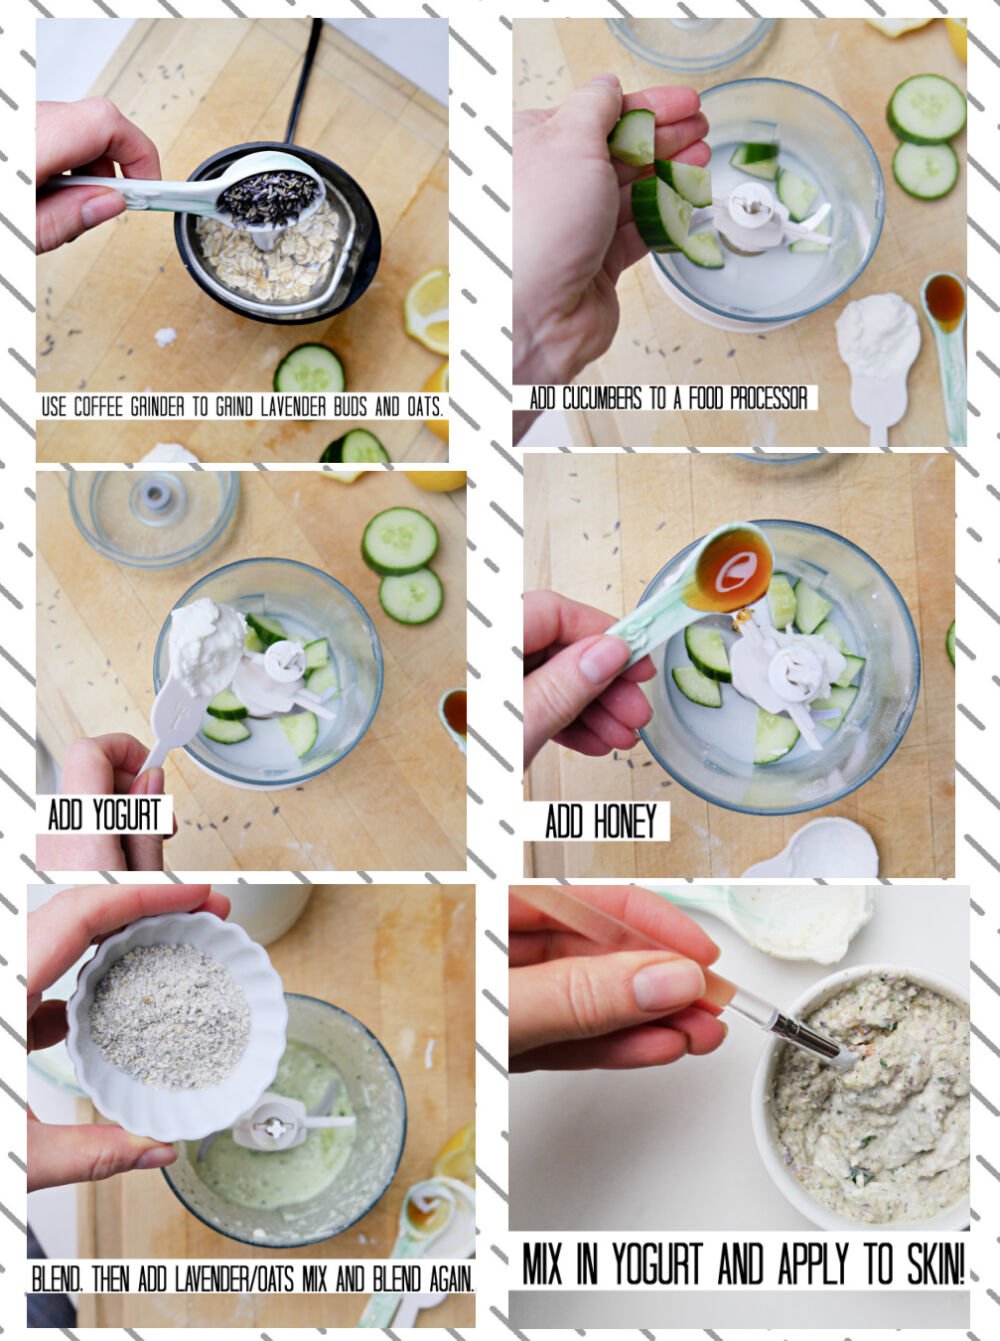 Cucumber Face Mask Benefits & Recipe